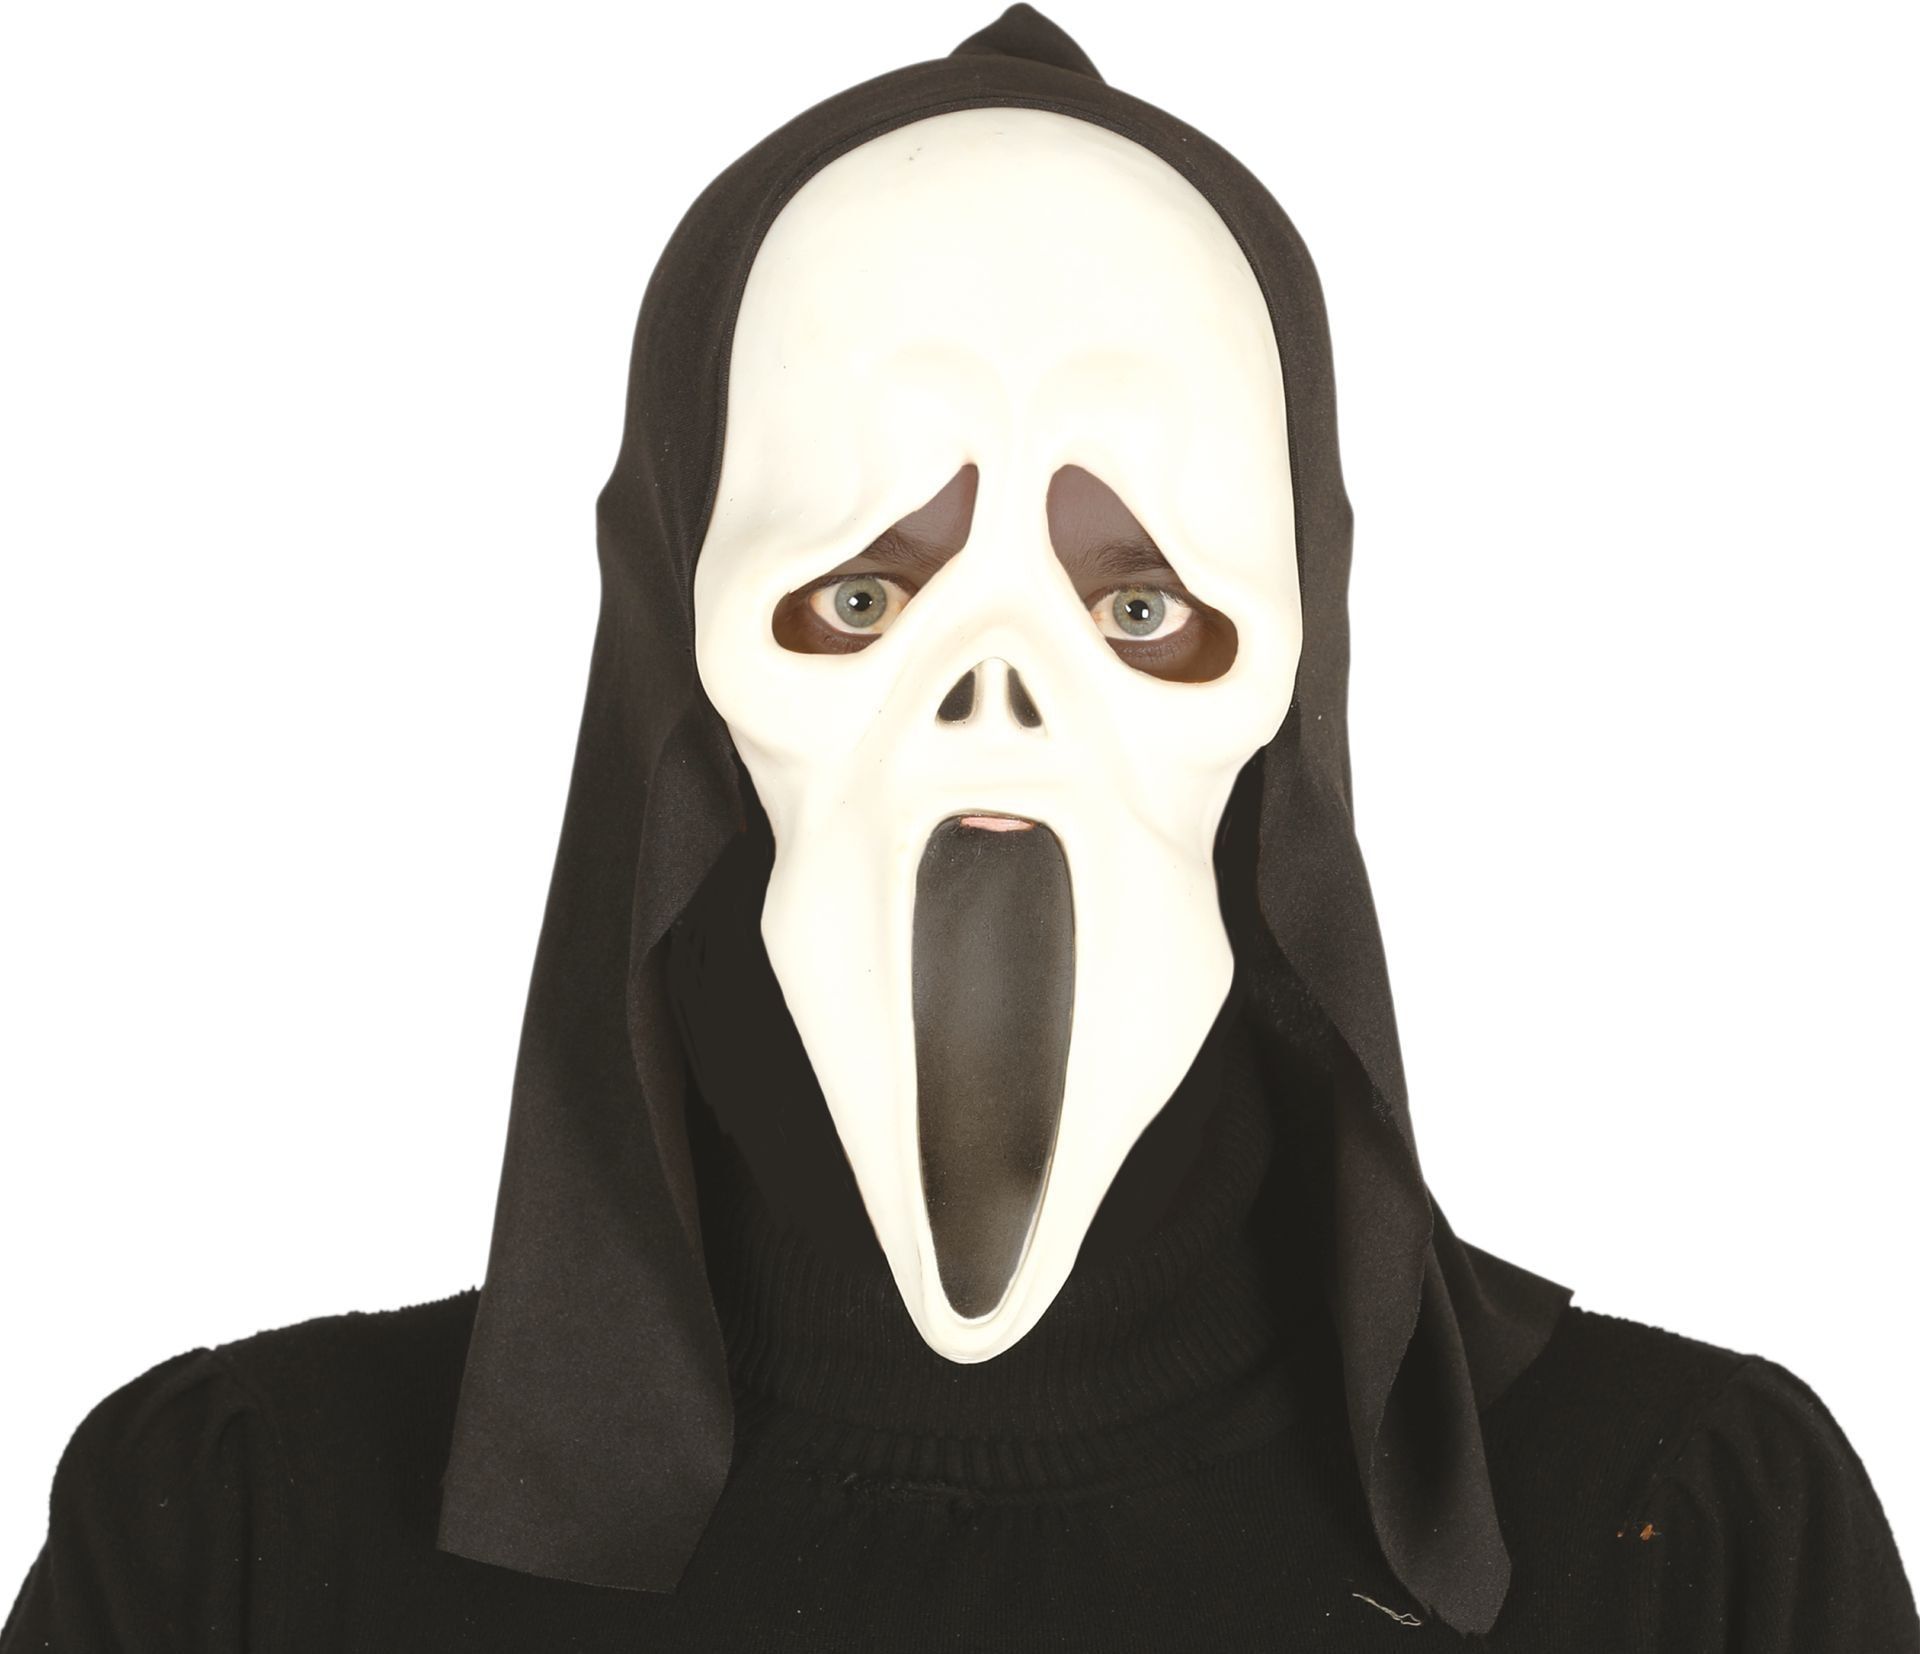 Grim Reaper masker